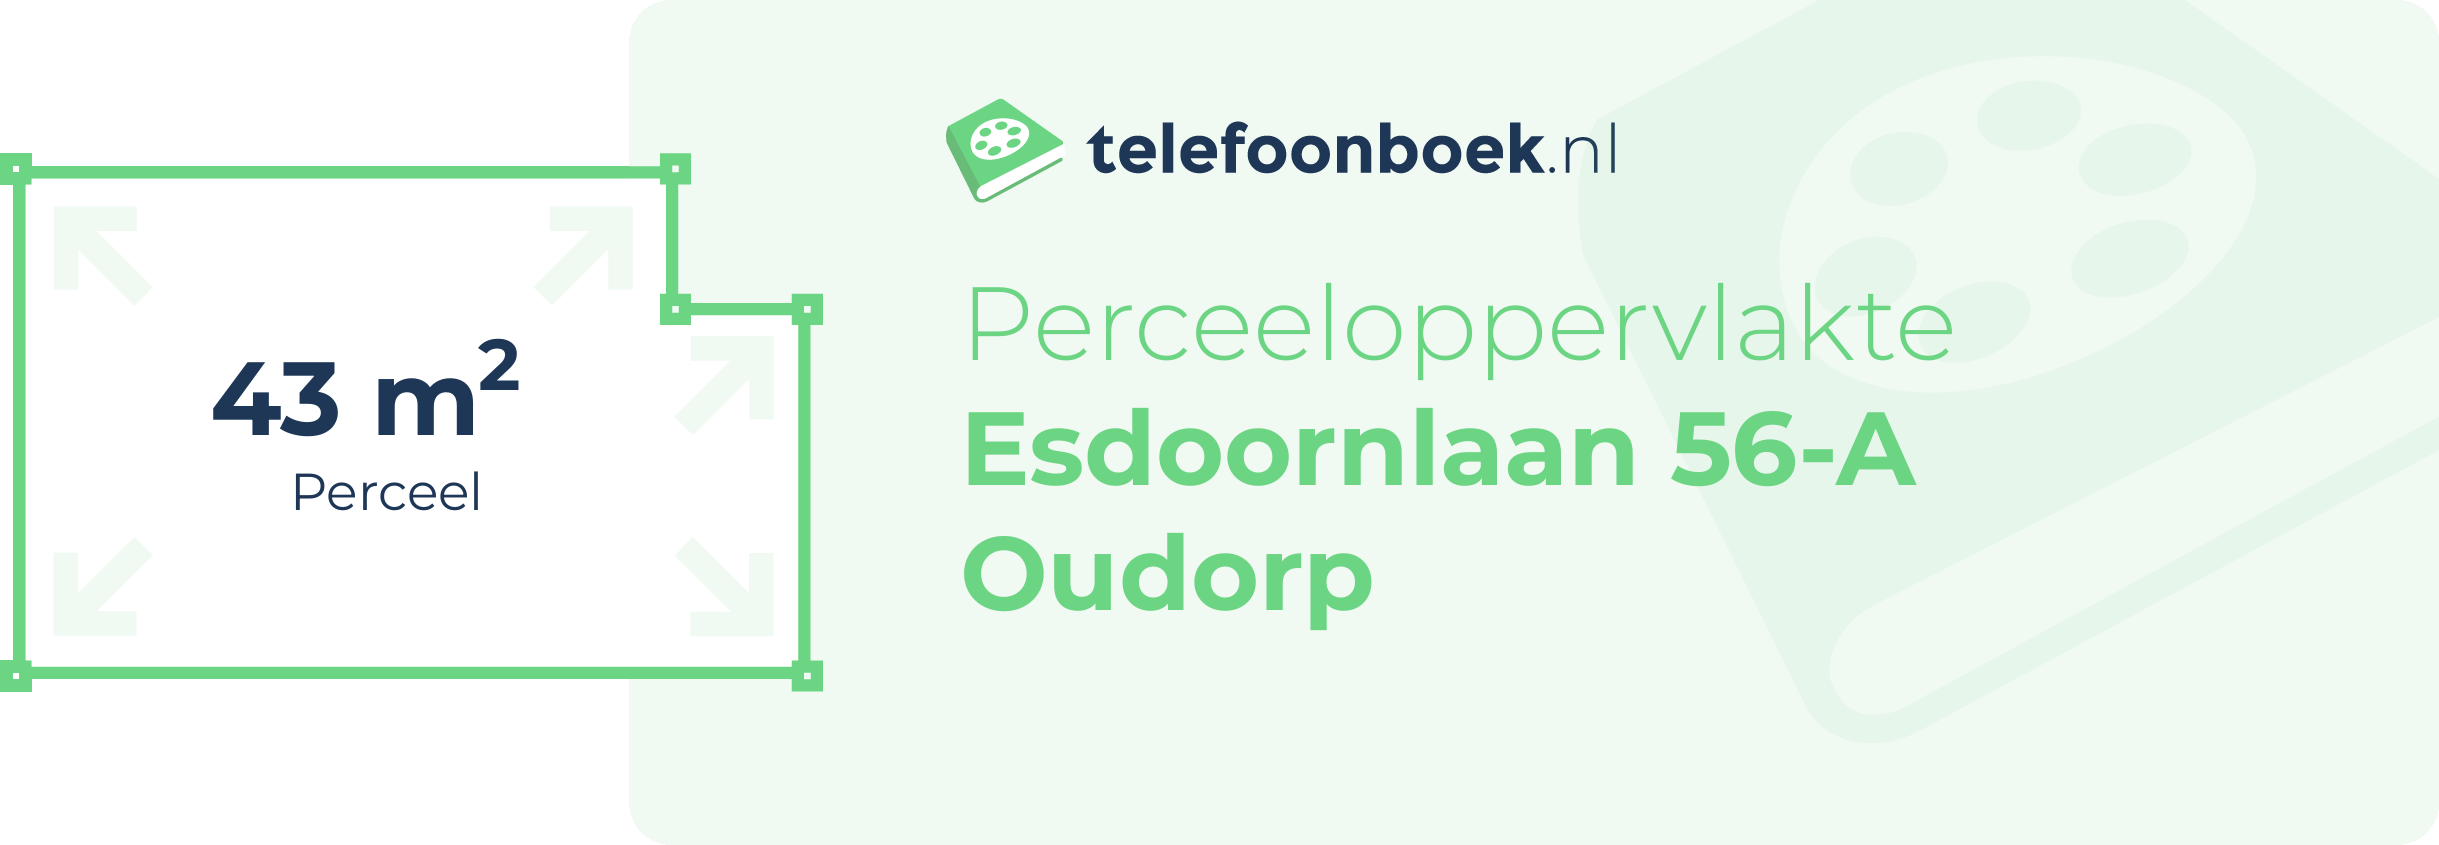 Perceeloppervlakte Esdoornlaan 56-A Oudorp